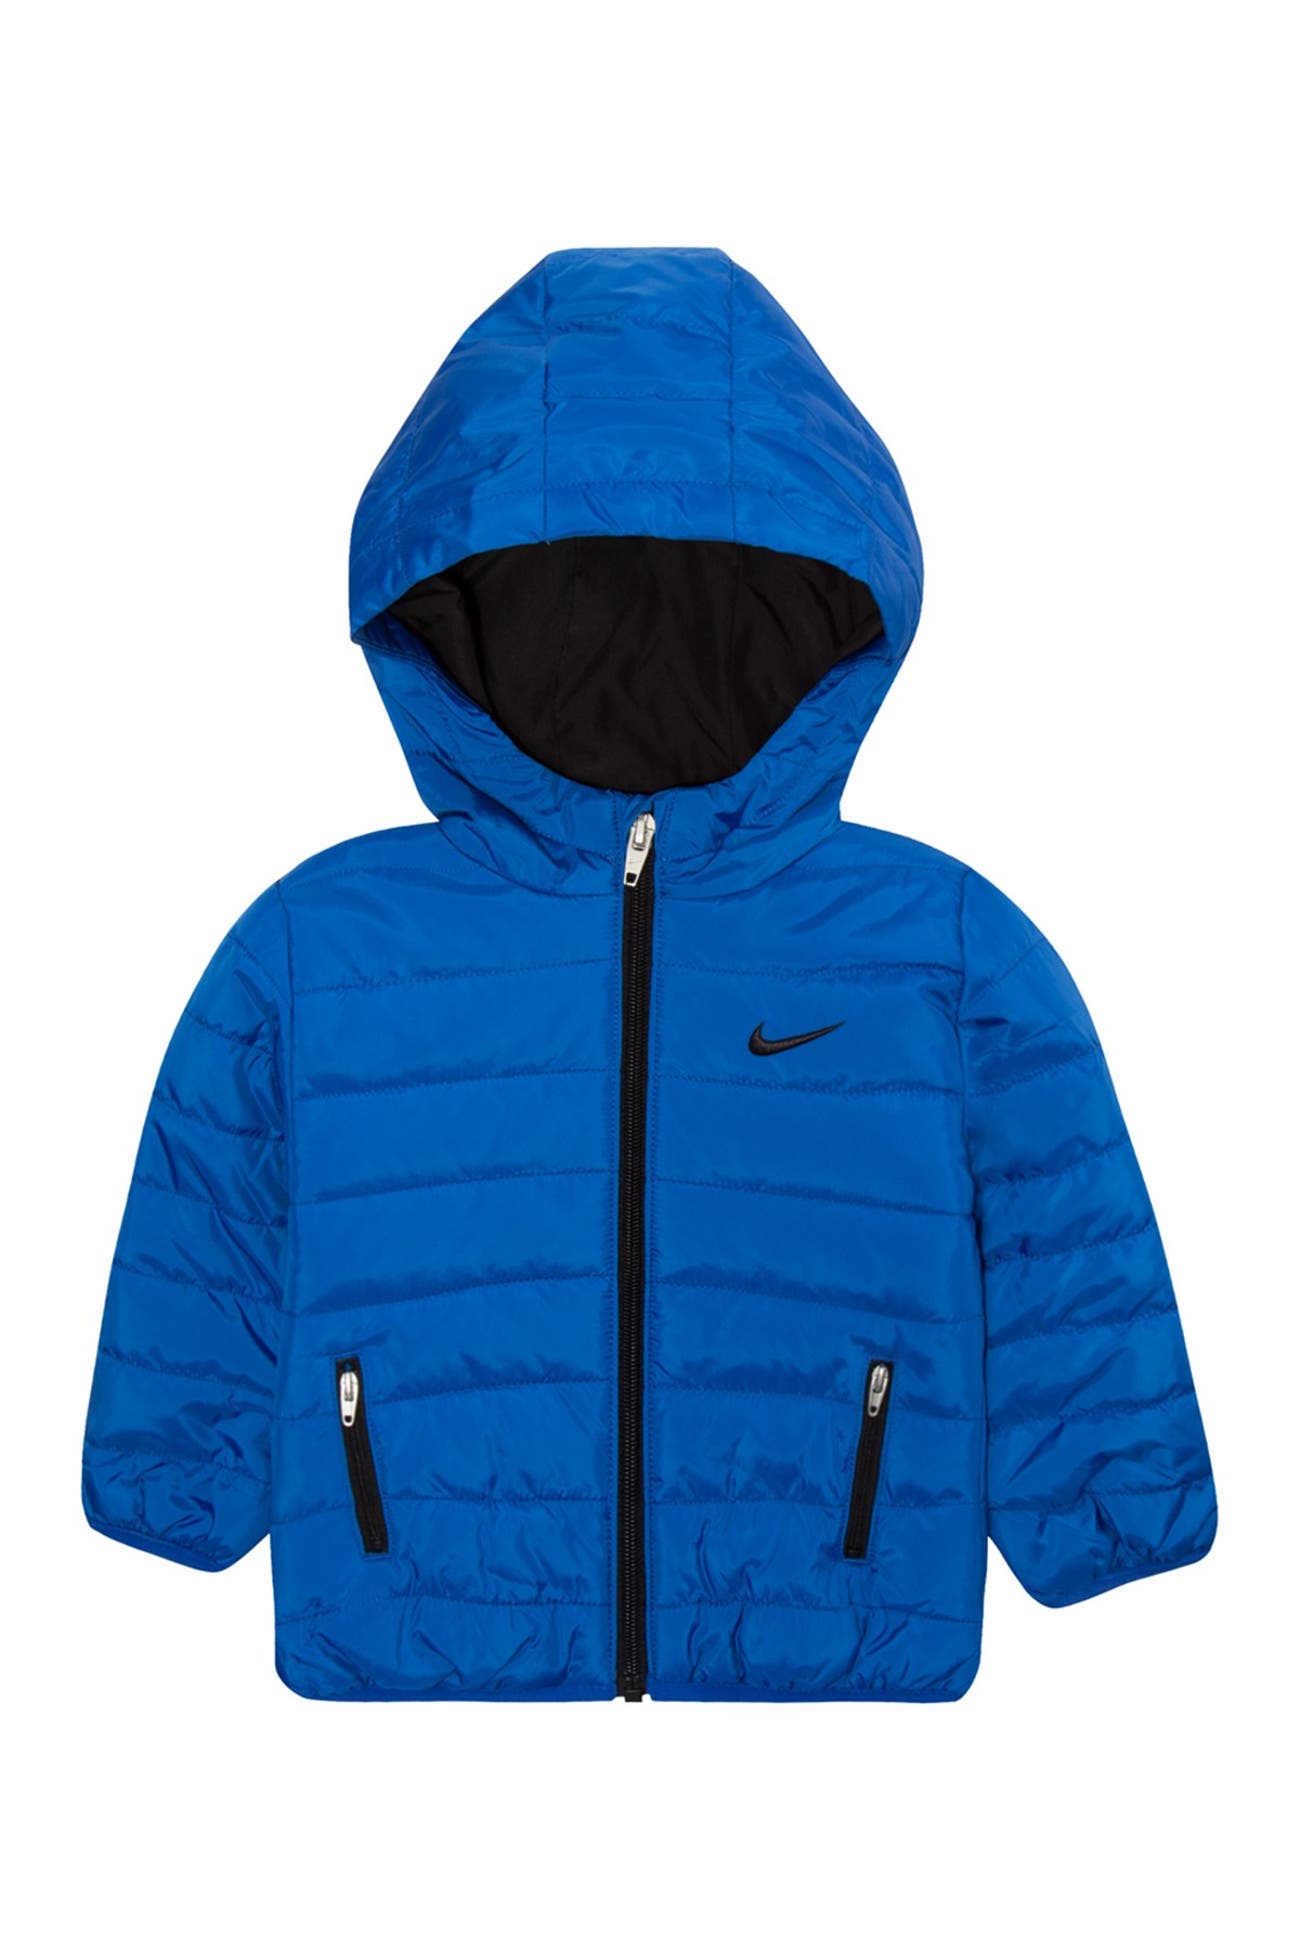 Nike | Quilted Jacket | Nordstrom Rack